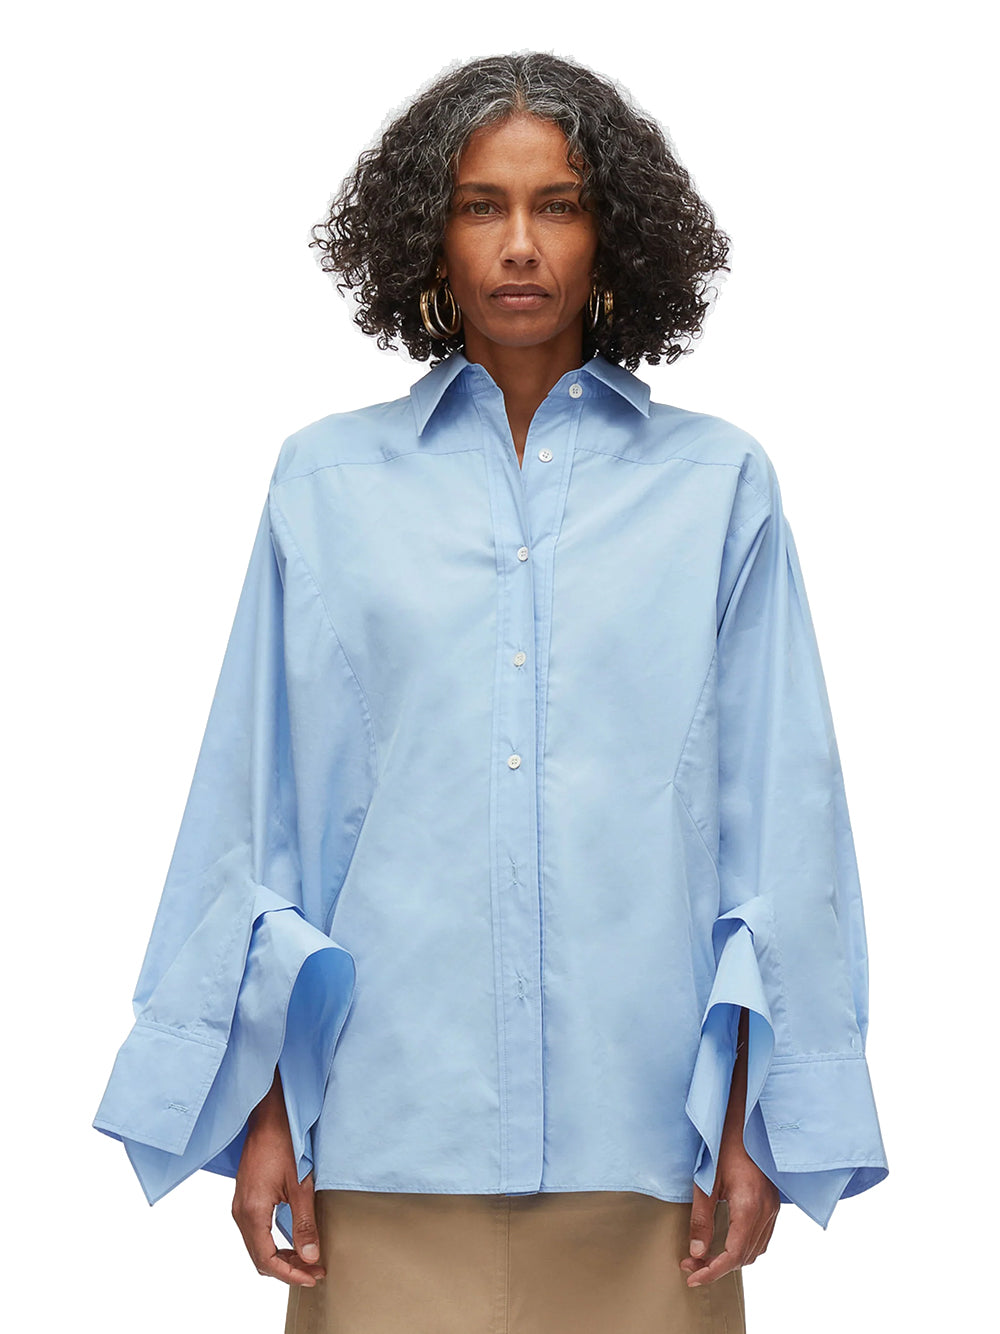 Oversize Shirt with Cascade Cuff (Oxford Blue)